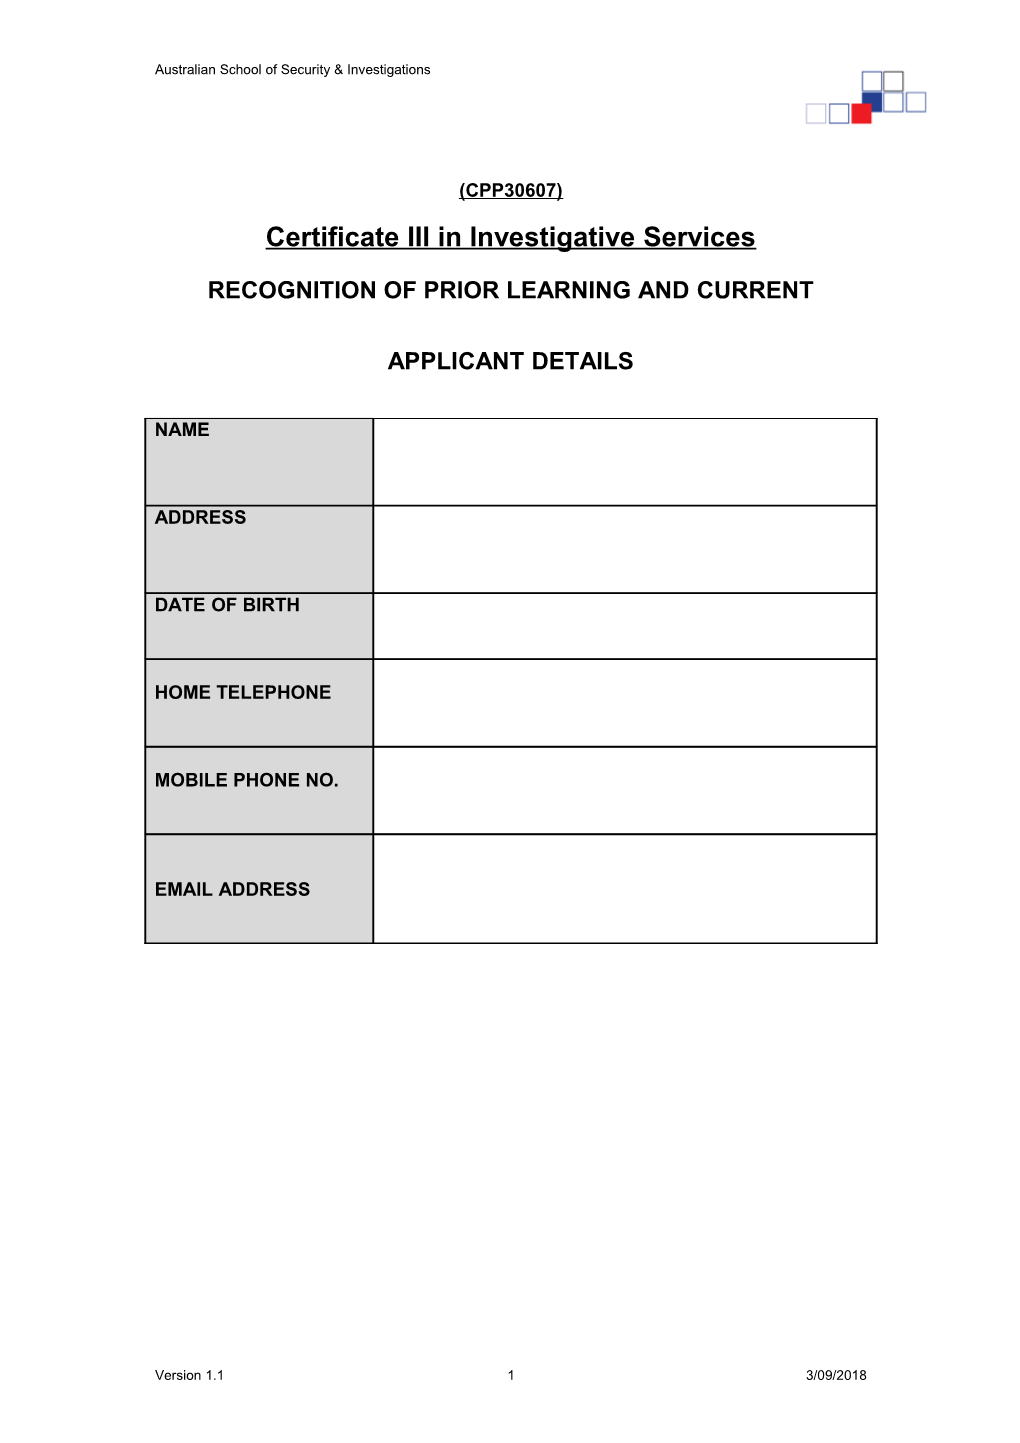 Certificate III in Investigative Services